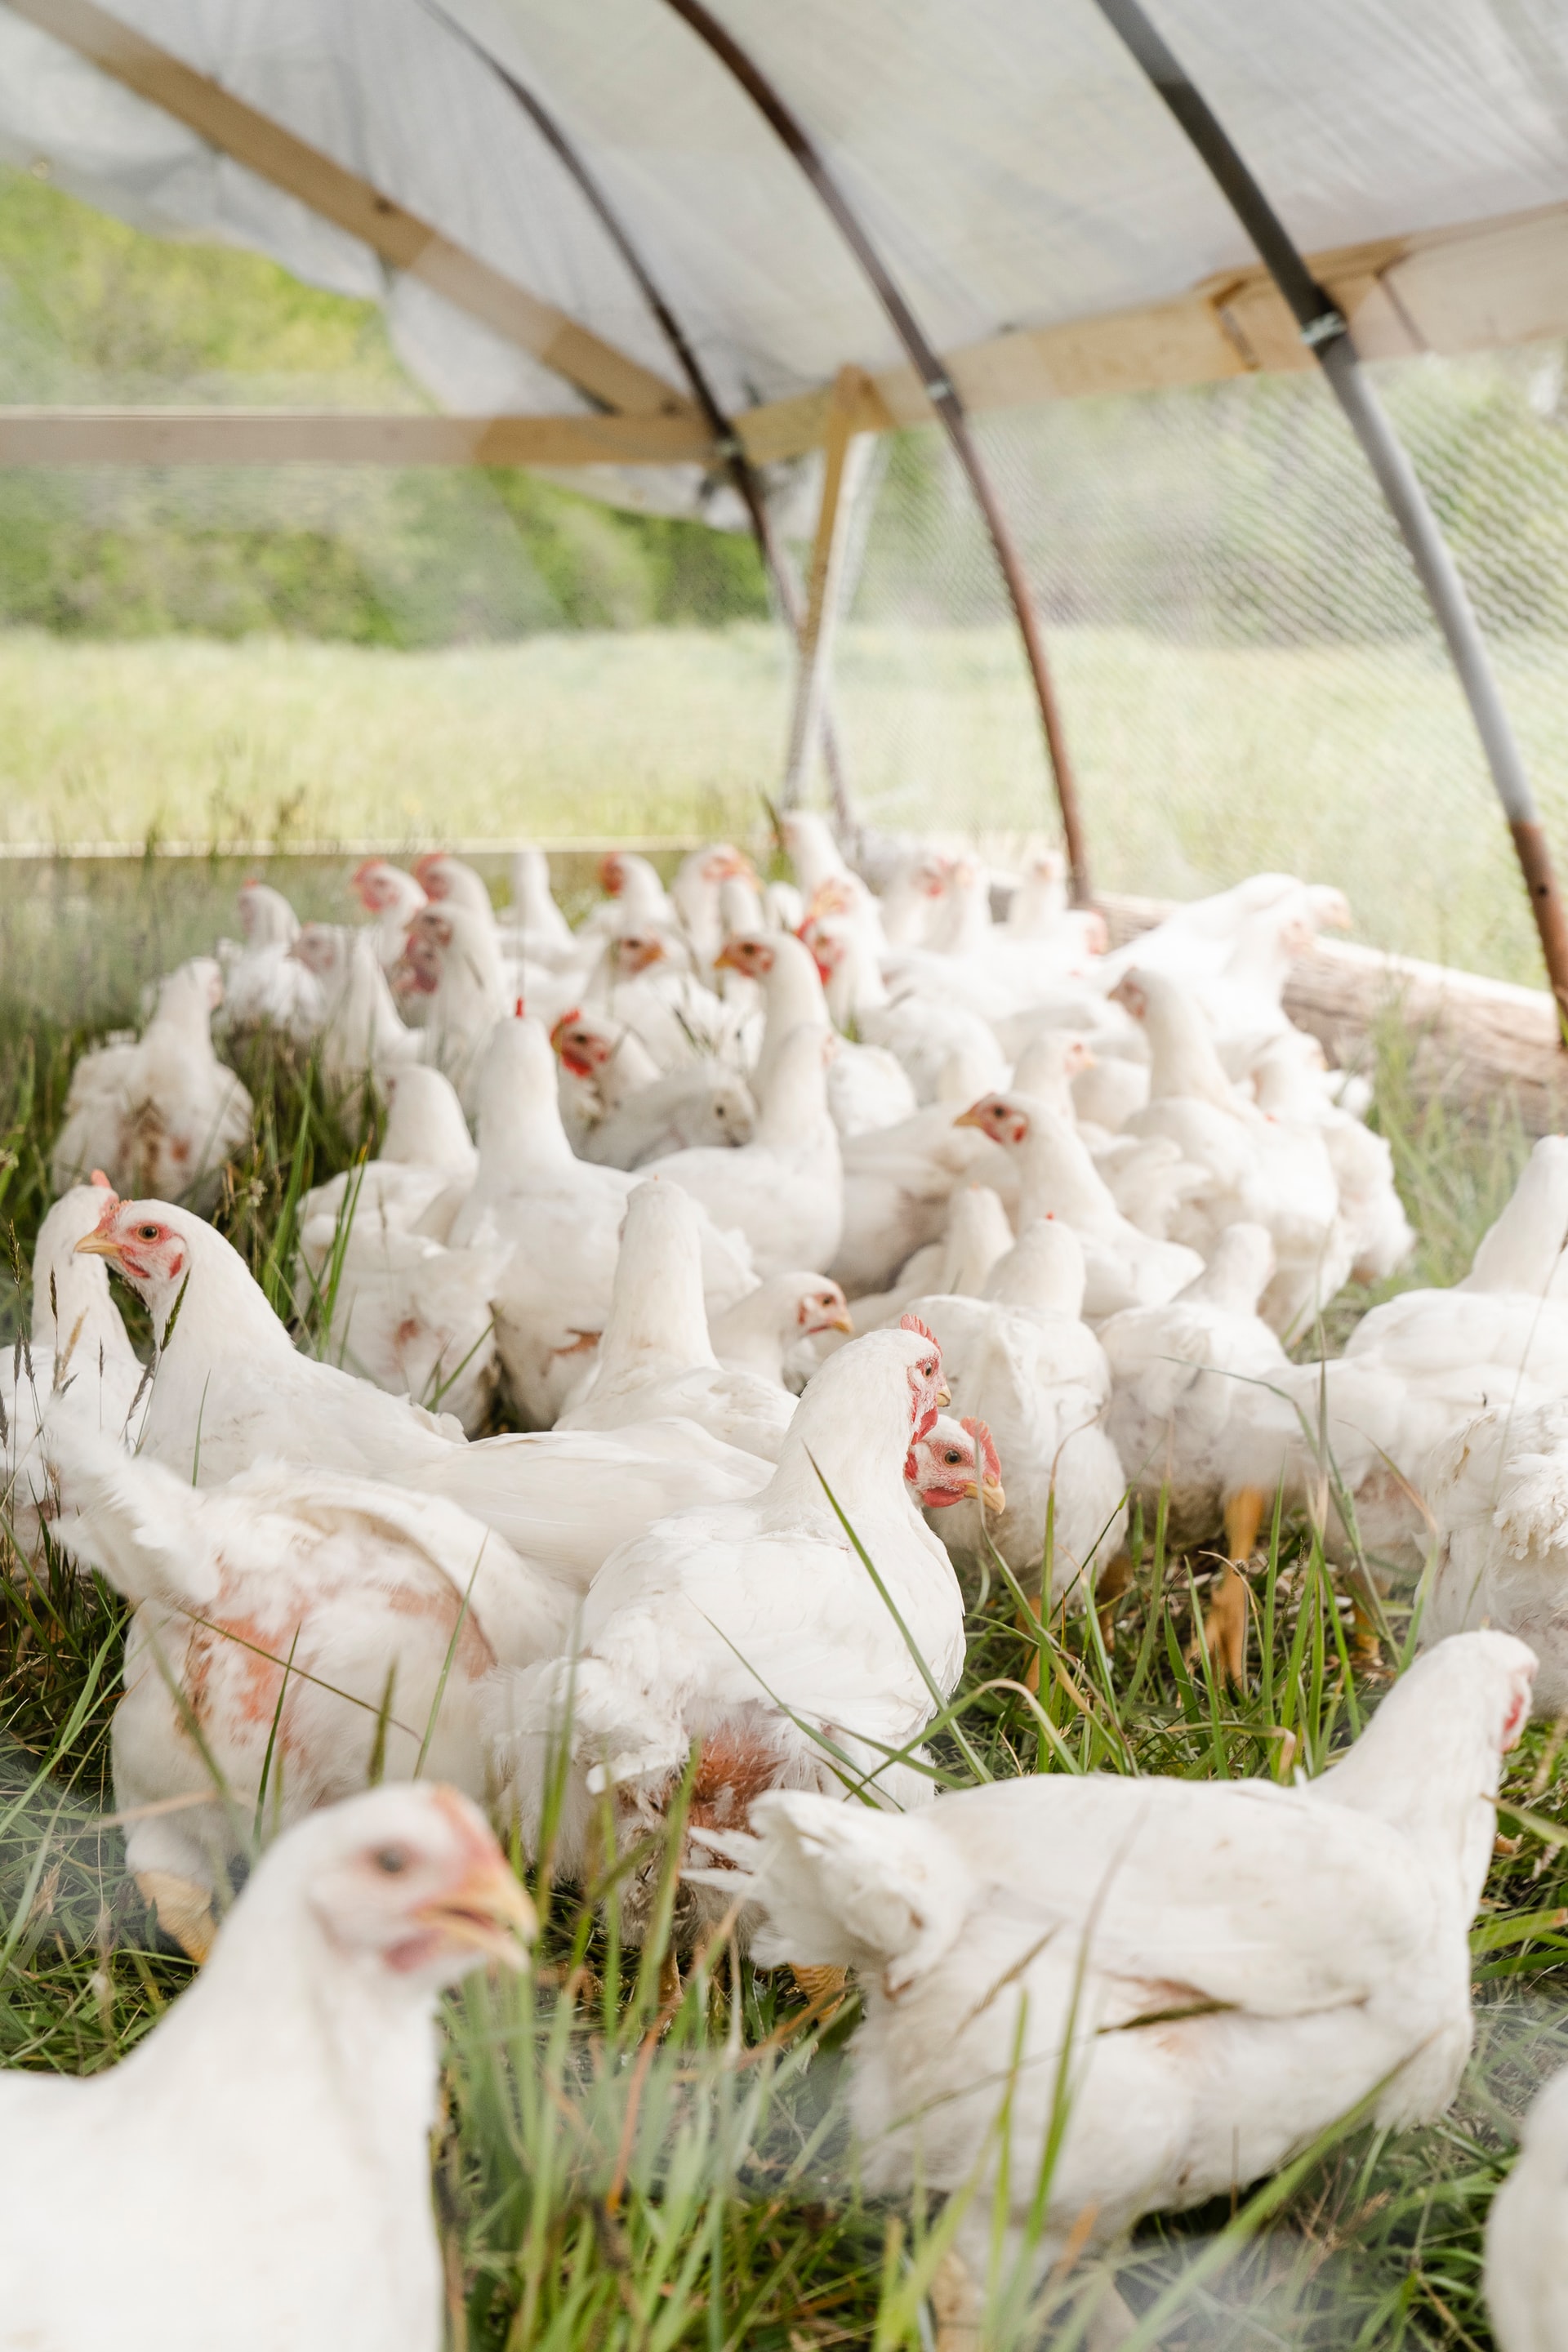 White-chickens-in-grassy-cage